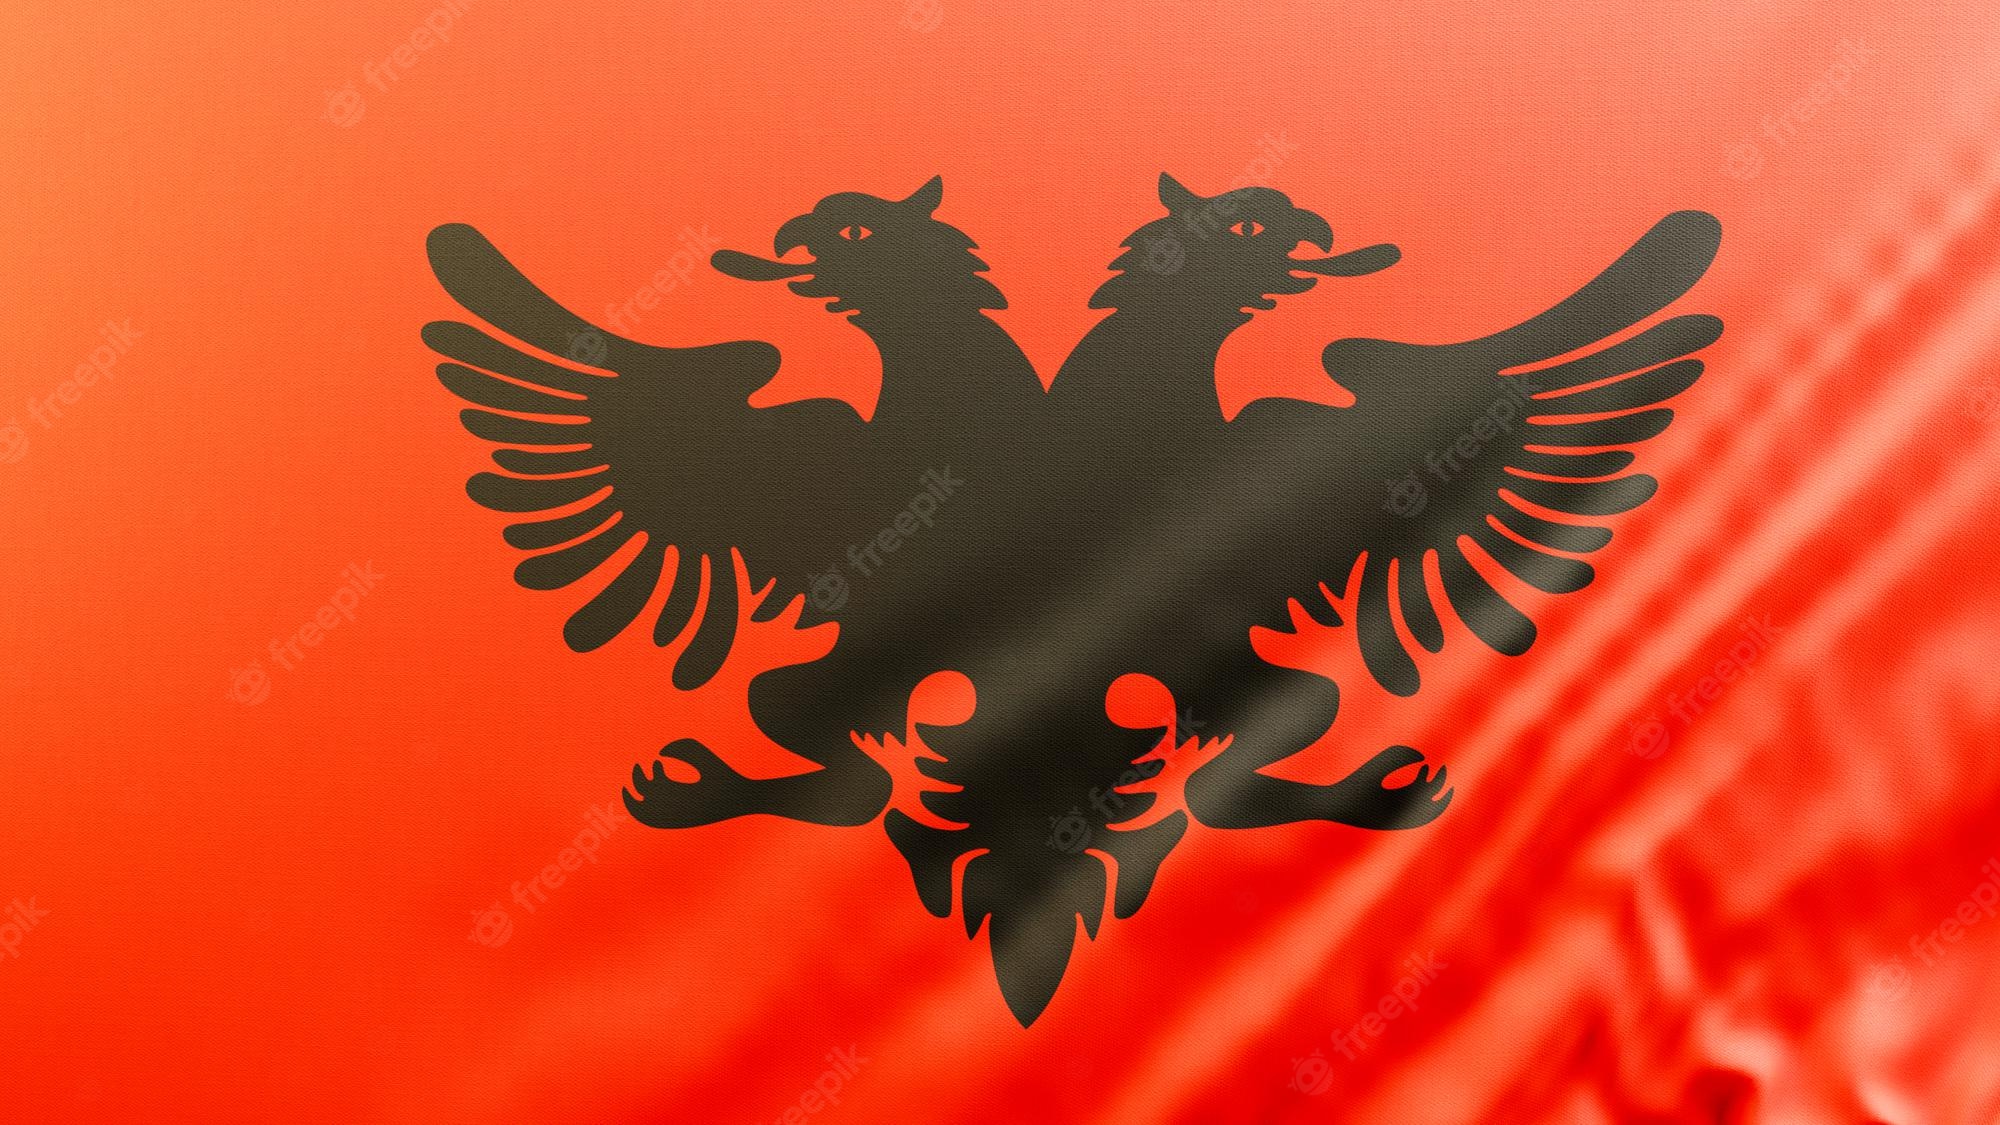 Premium Photok high resolution albania flag wallpaper background realistic 3D rendering 160